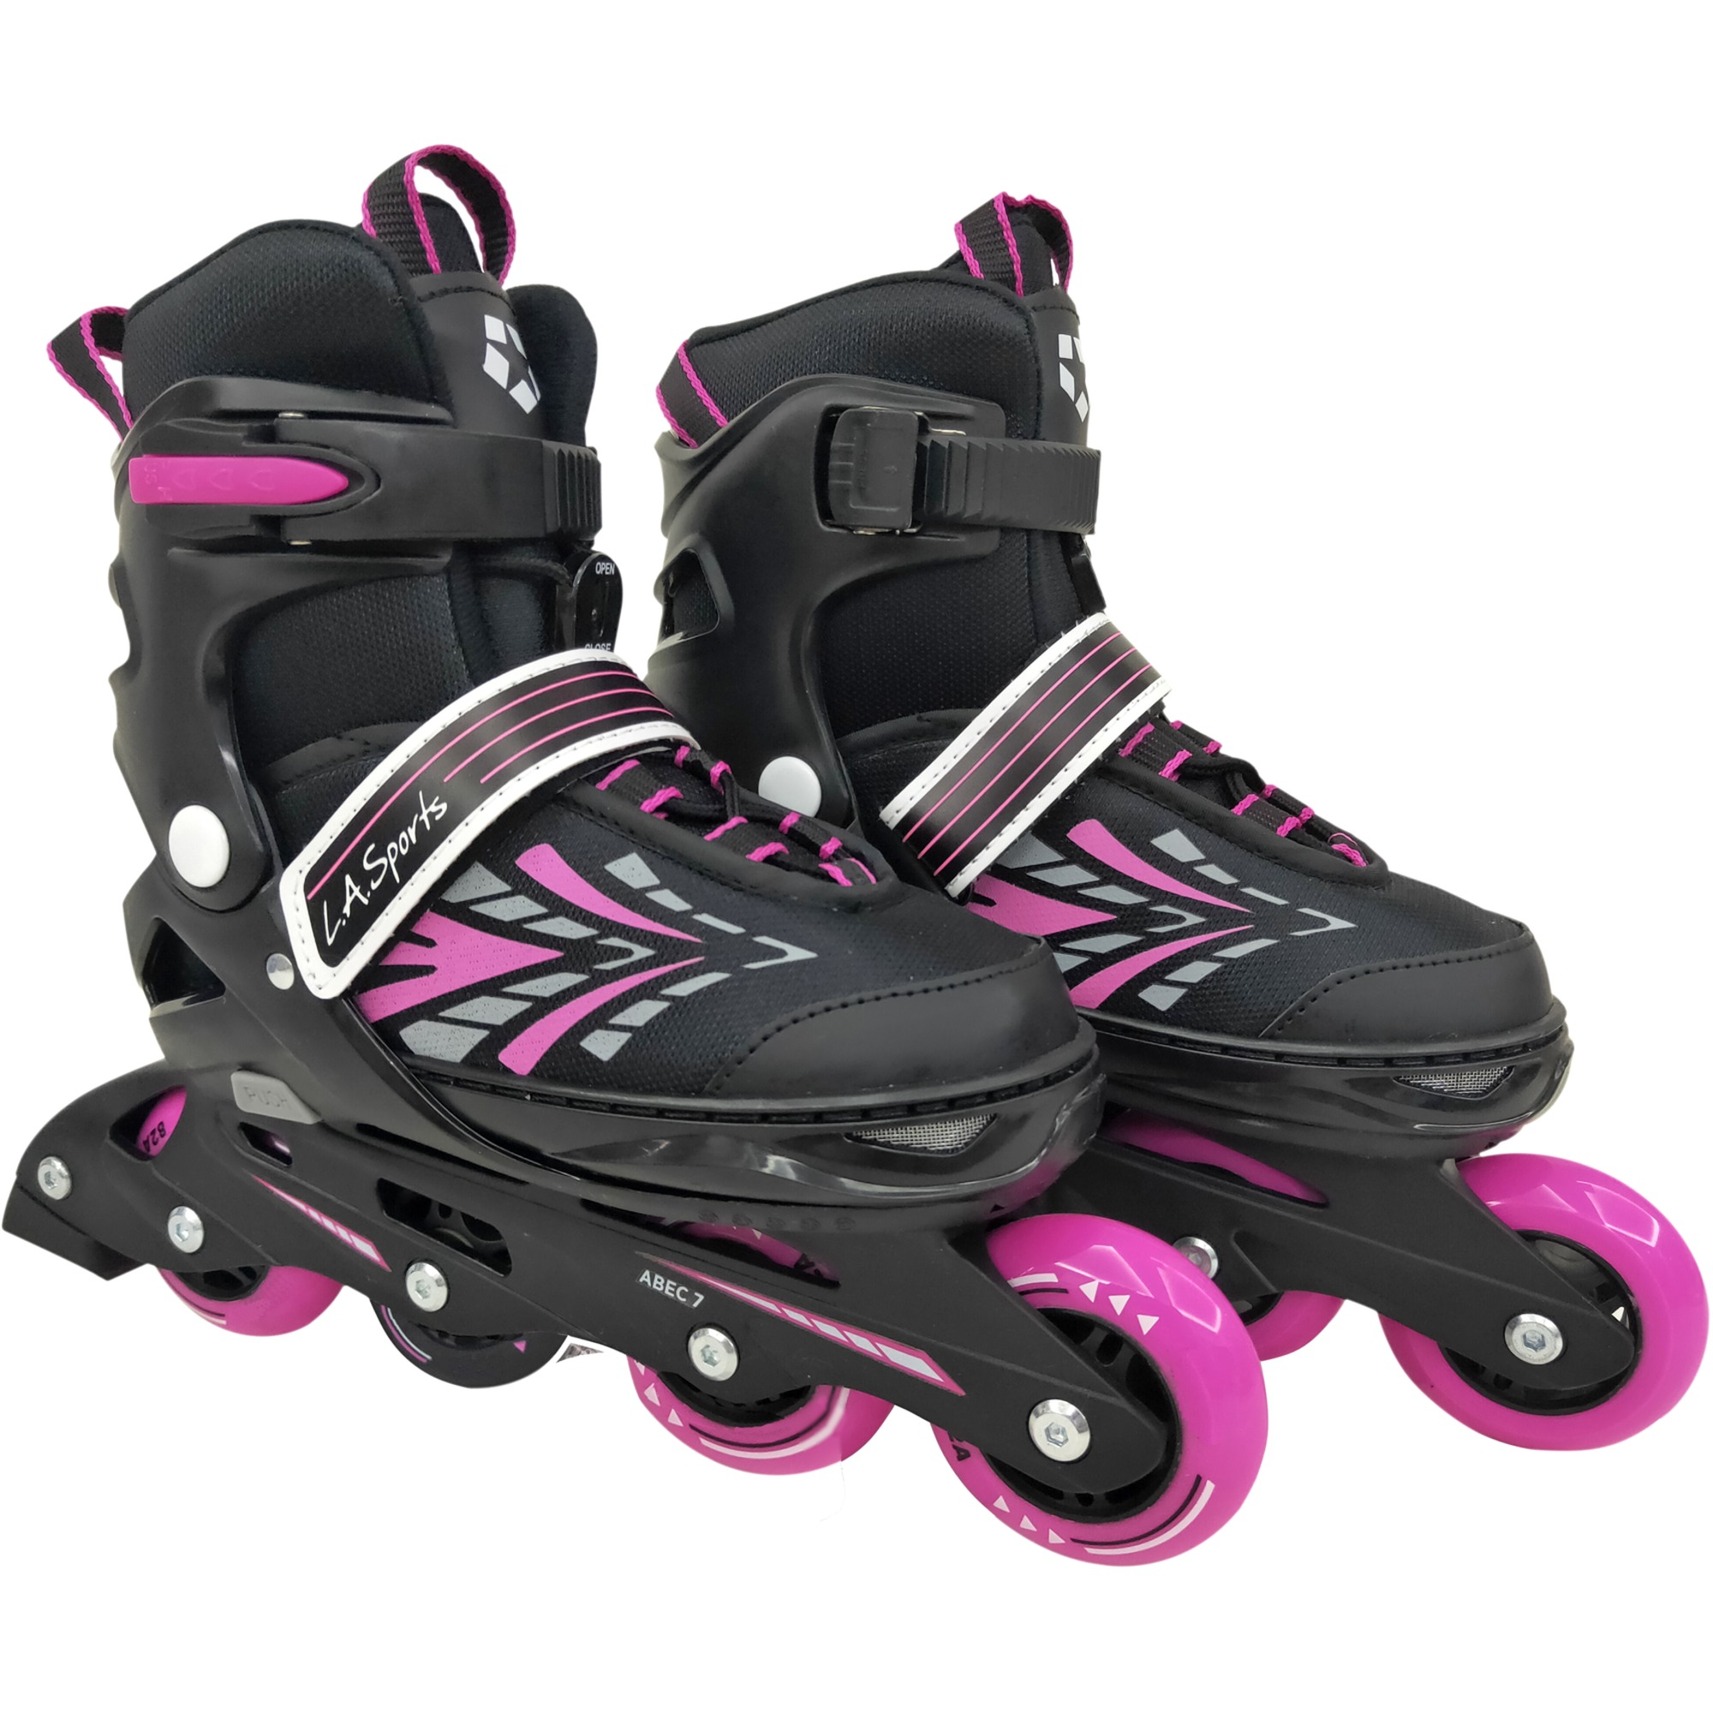 Image of Alternate - Inline Skates Soft-Boot Stripes Gr. 29-33, Inline-Skates online einkaufen bei Alternate